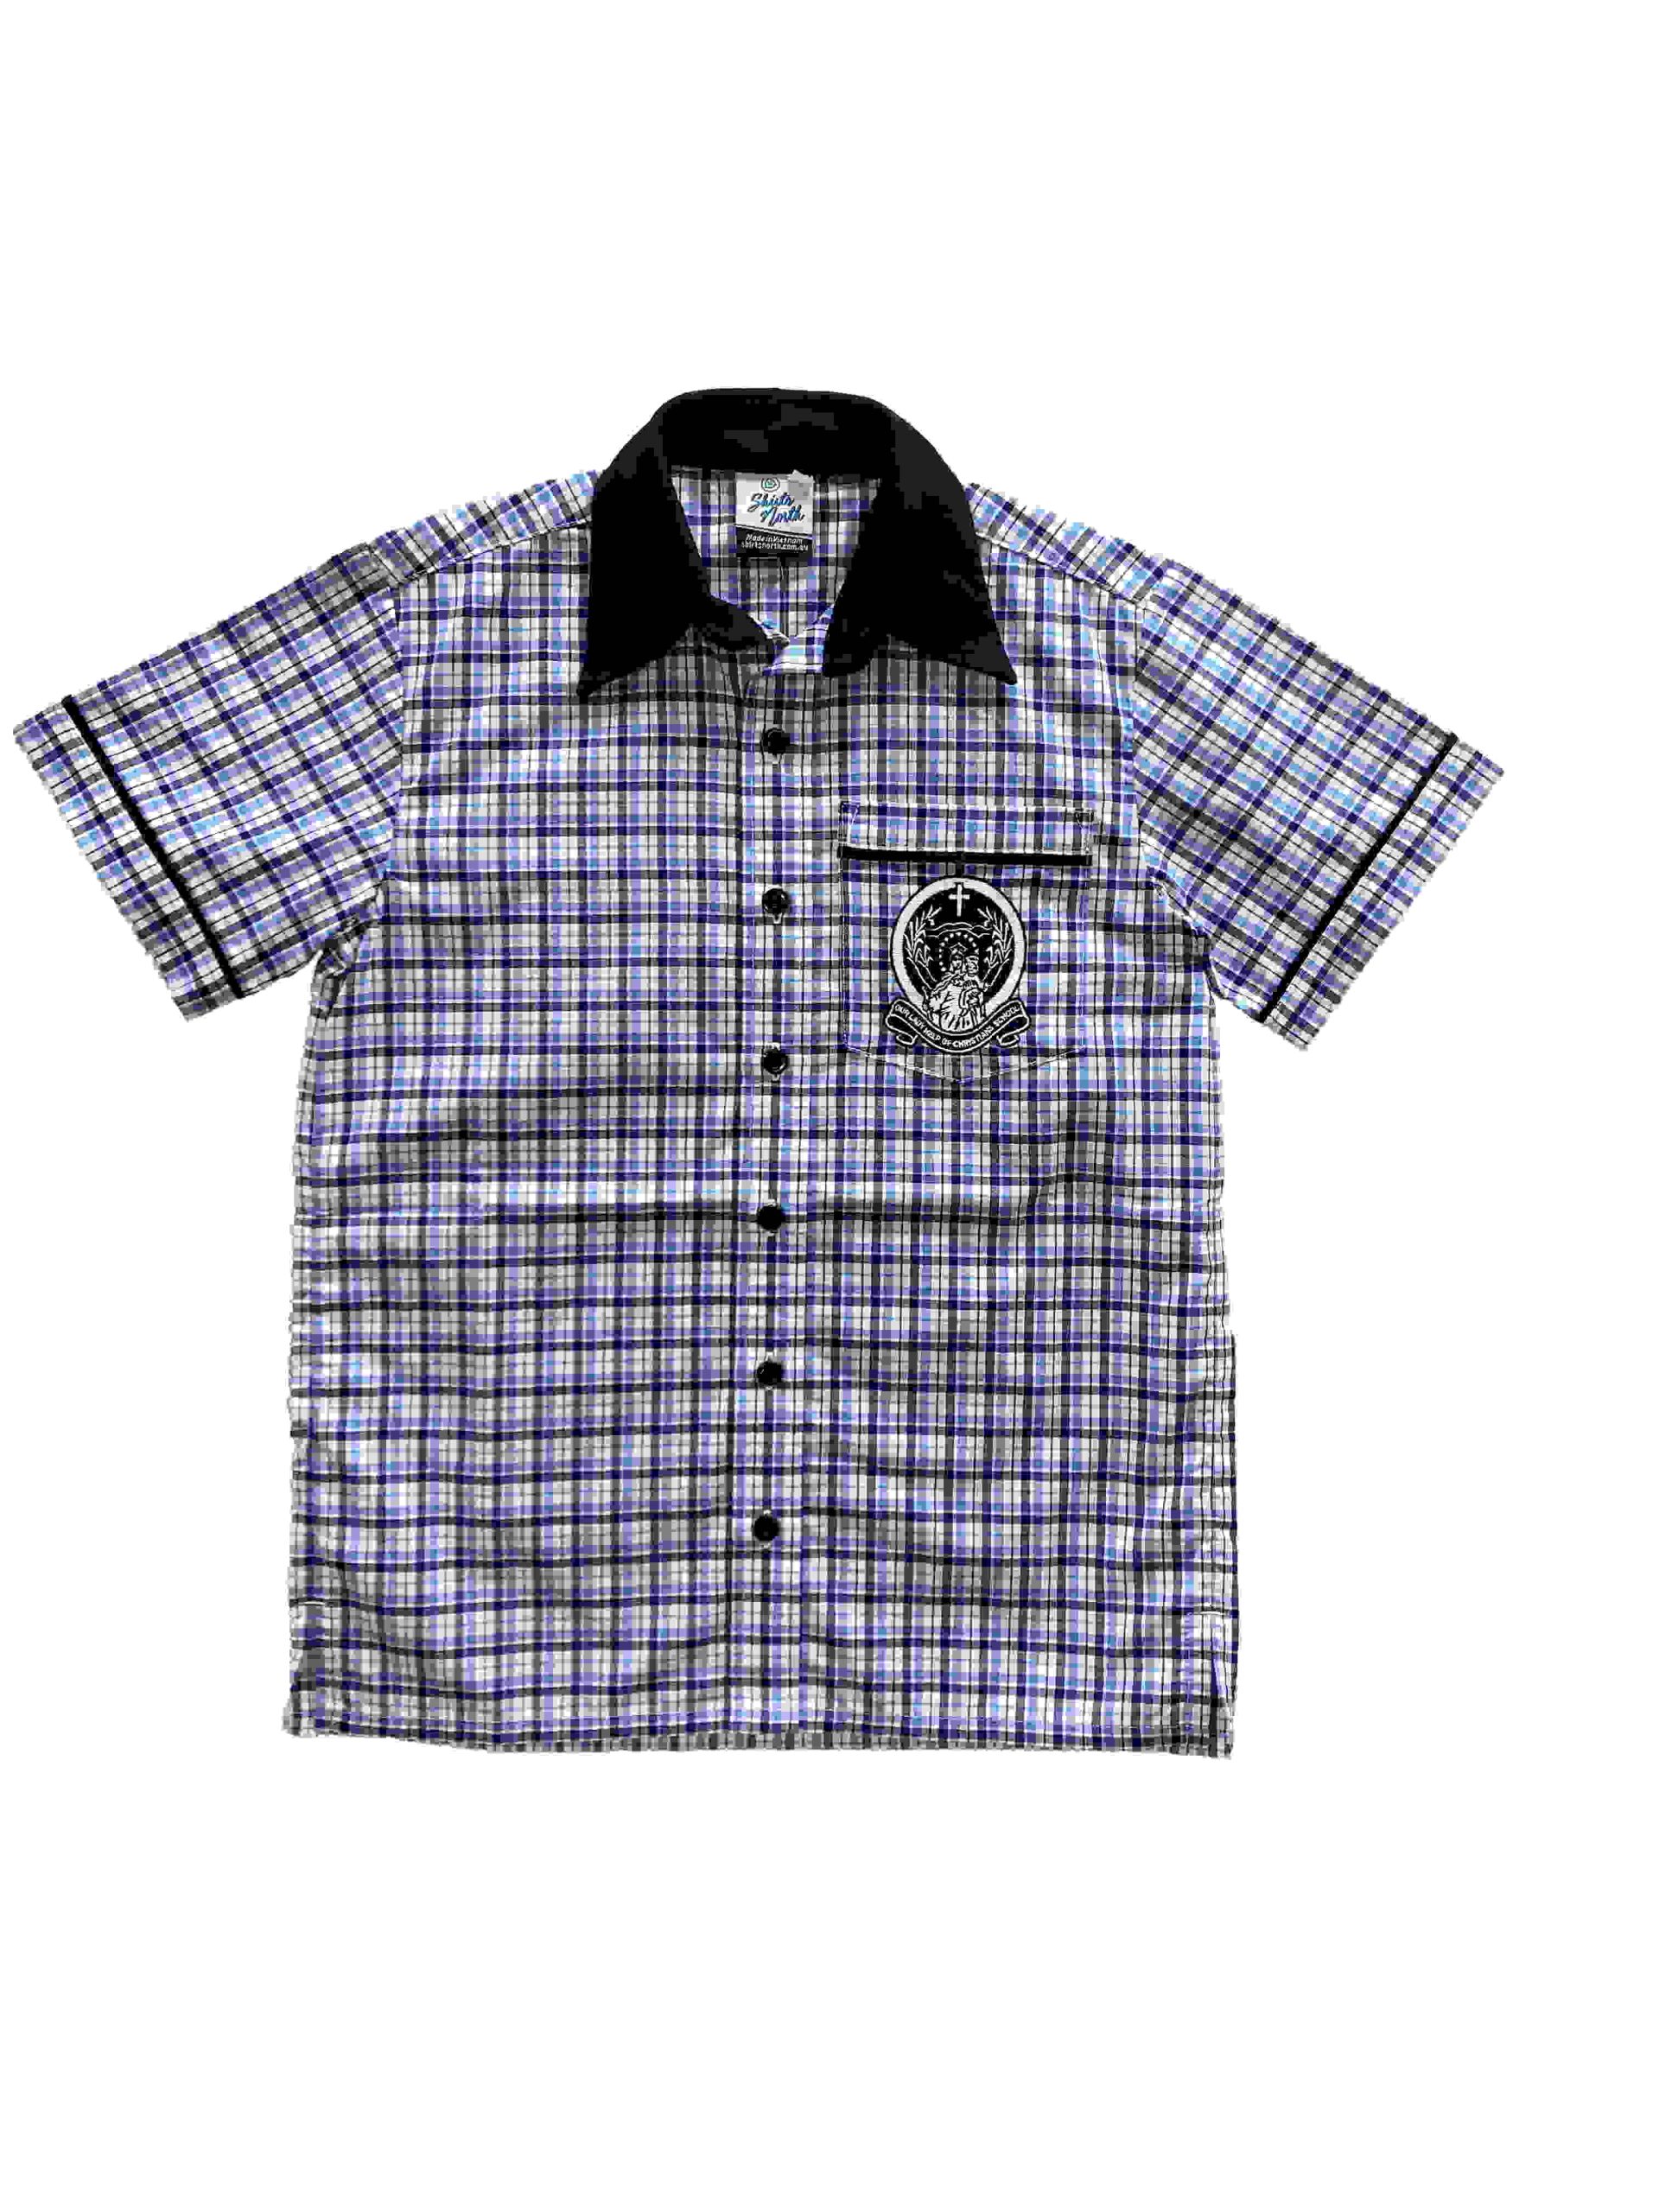 OLHOC Unisex Shirt - Uniform Link